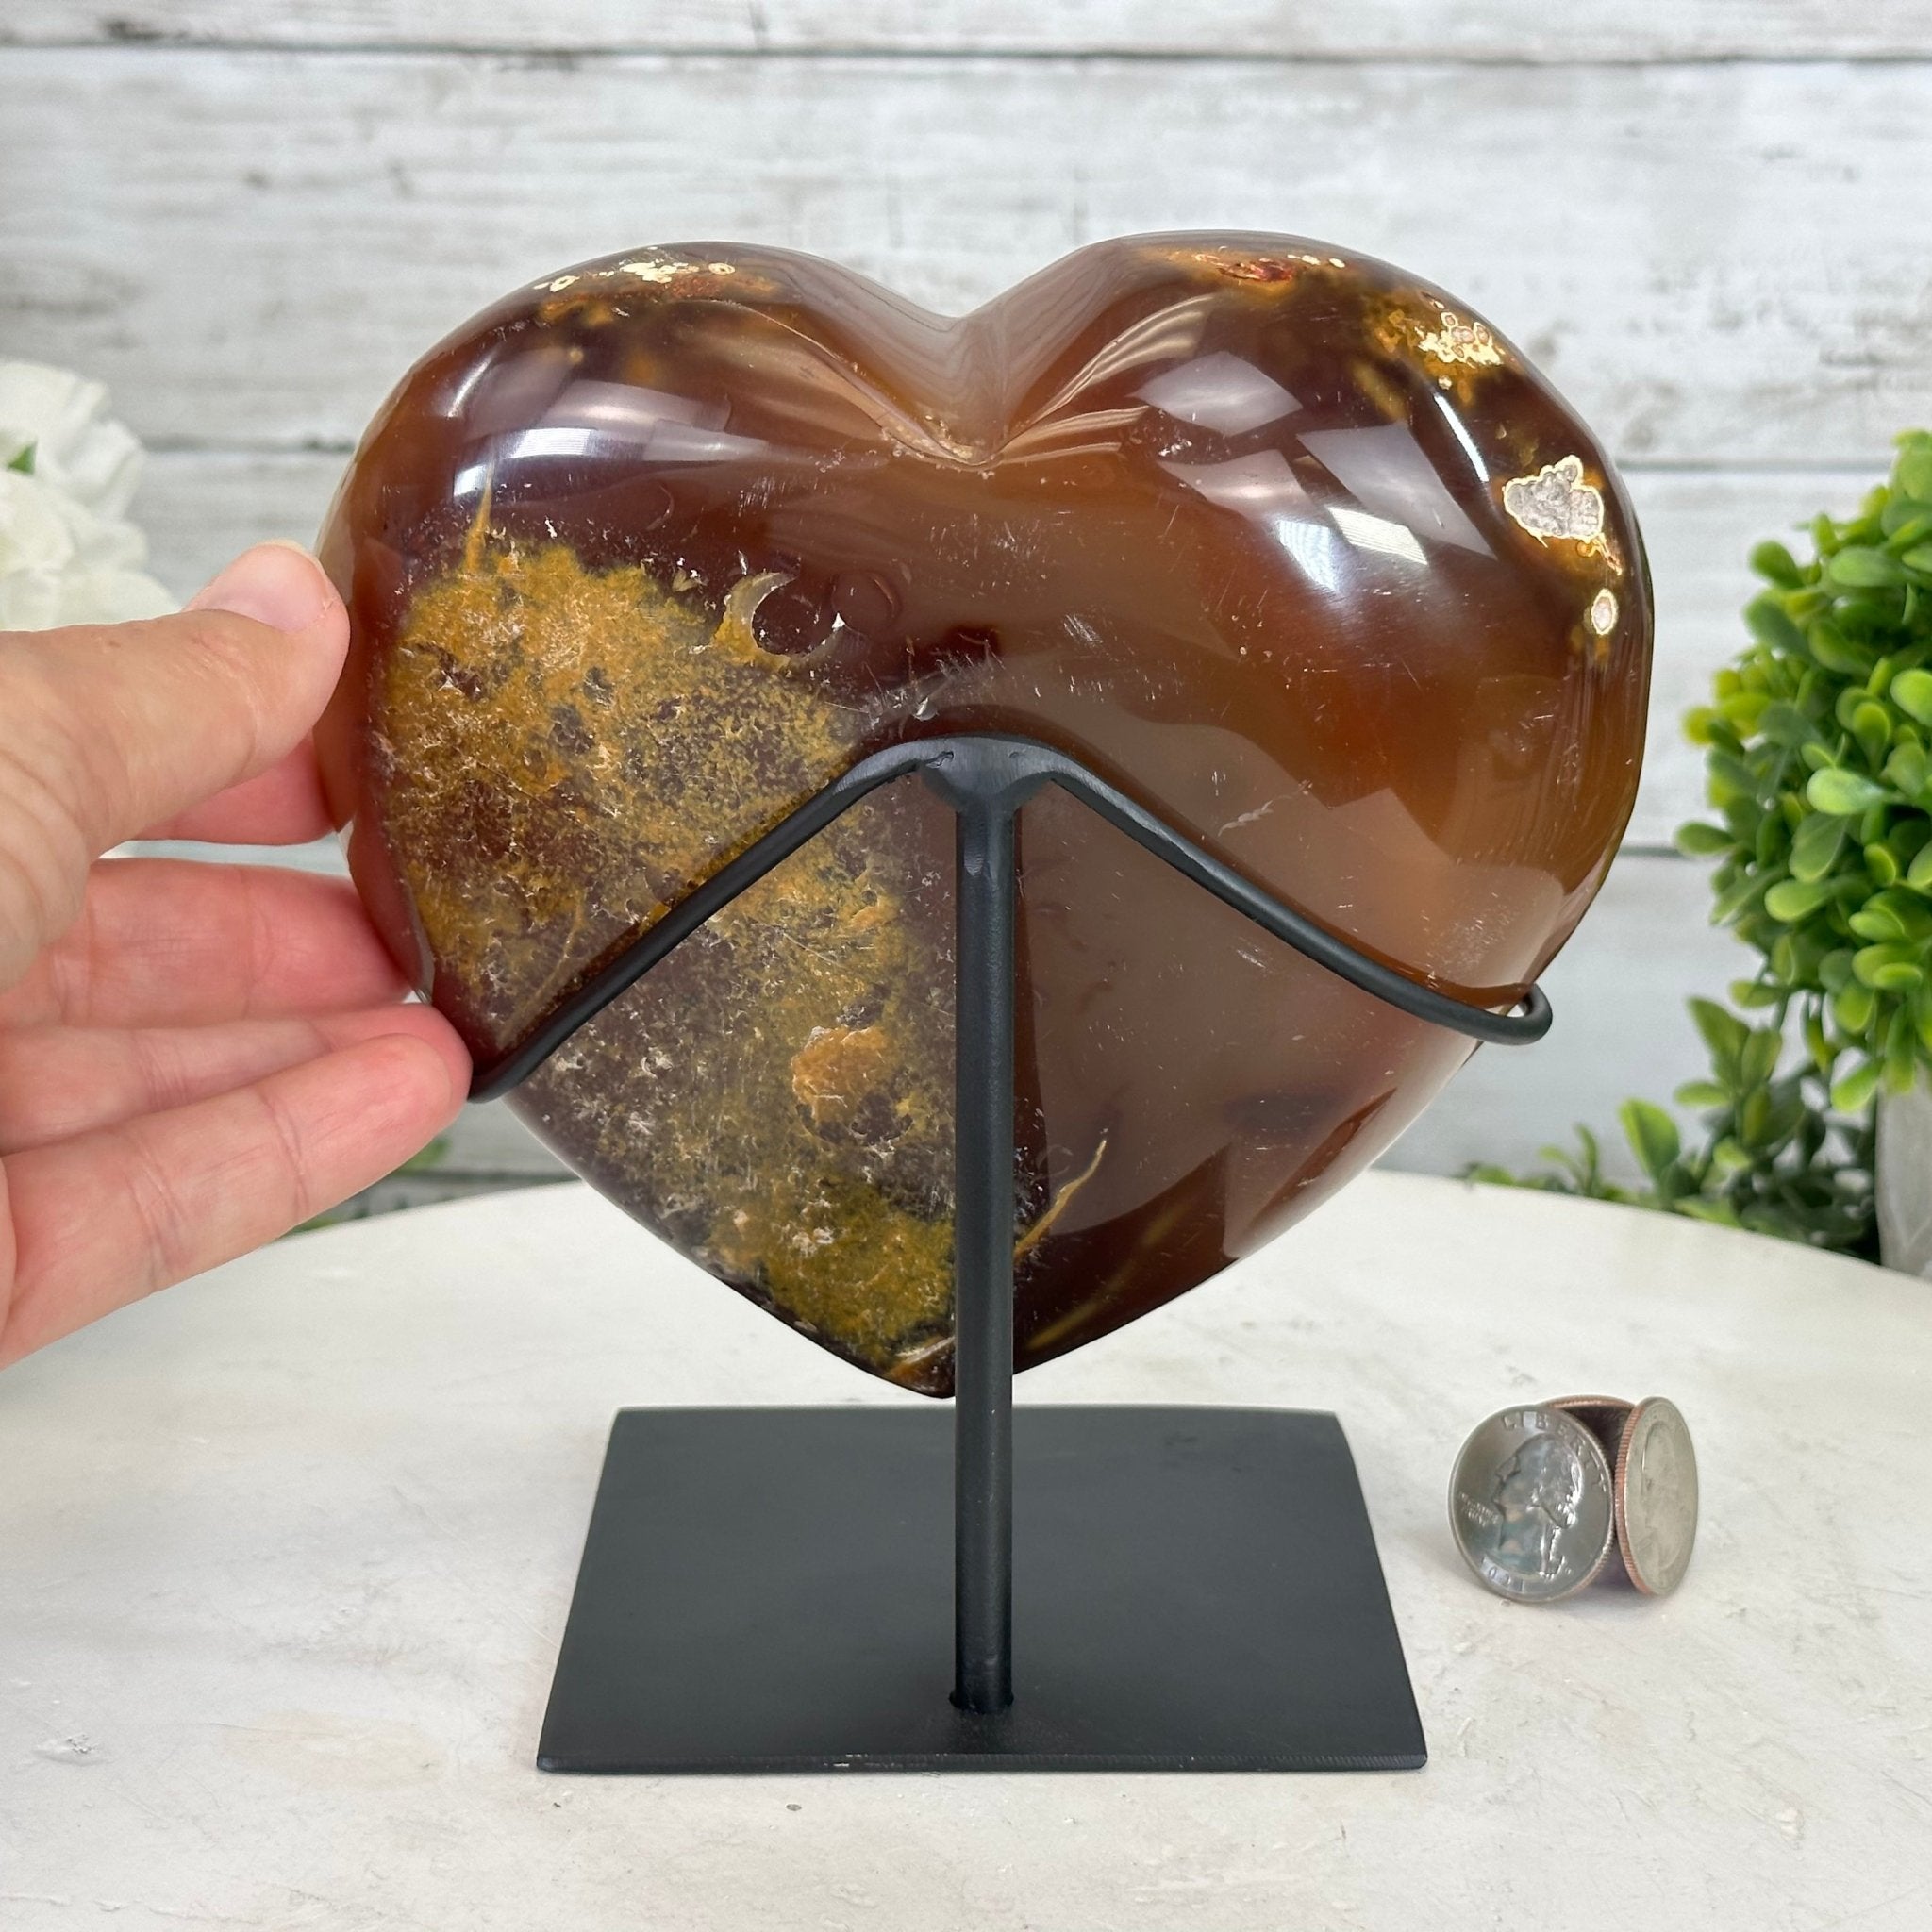 Polished Agate Heart Geode on a Metal Stand, 4 lbs & 6.8" Tall, Model #5468-0069 by Brazil Gems - Brazil GemsBrazil GemsPolished Agate Heart Geode on a Metal Stand, 4 lbs & 6.8" Tall, Model #5468-0069 by Brazil GemsHearts5468-0069